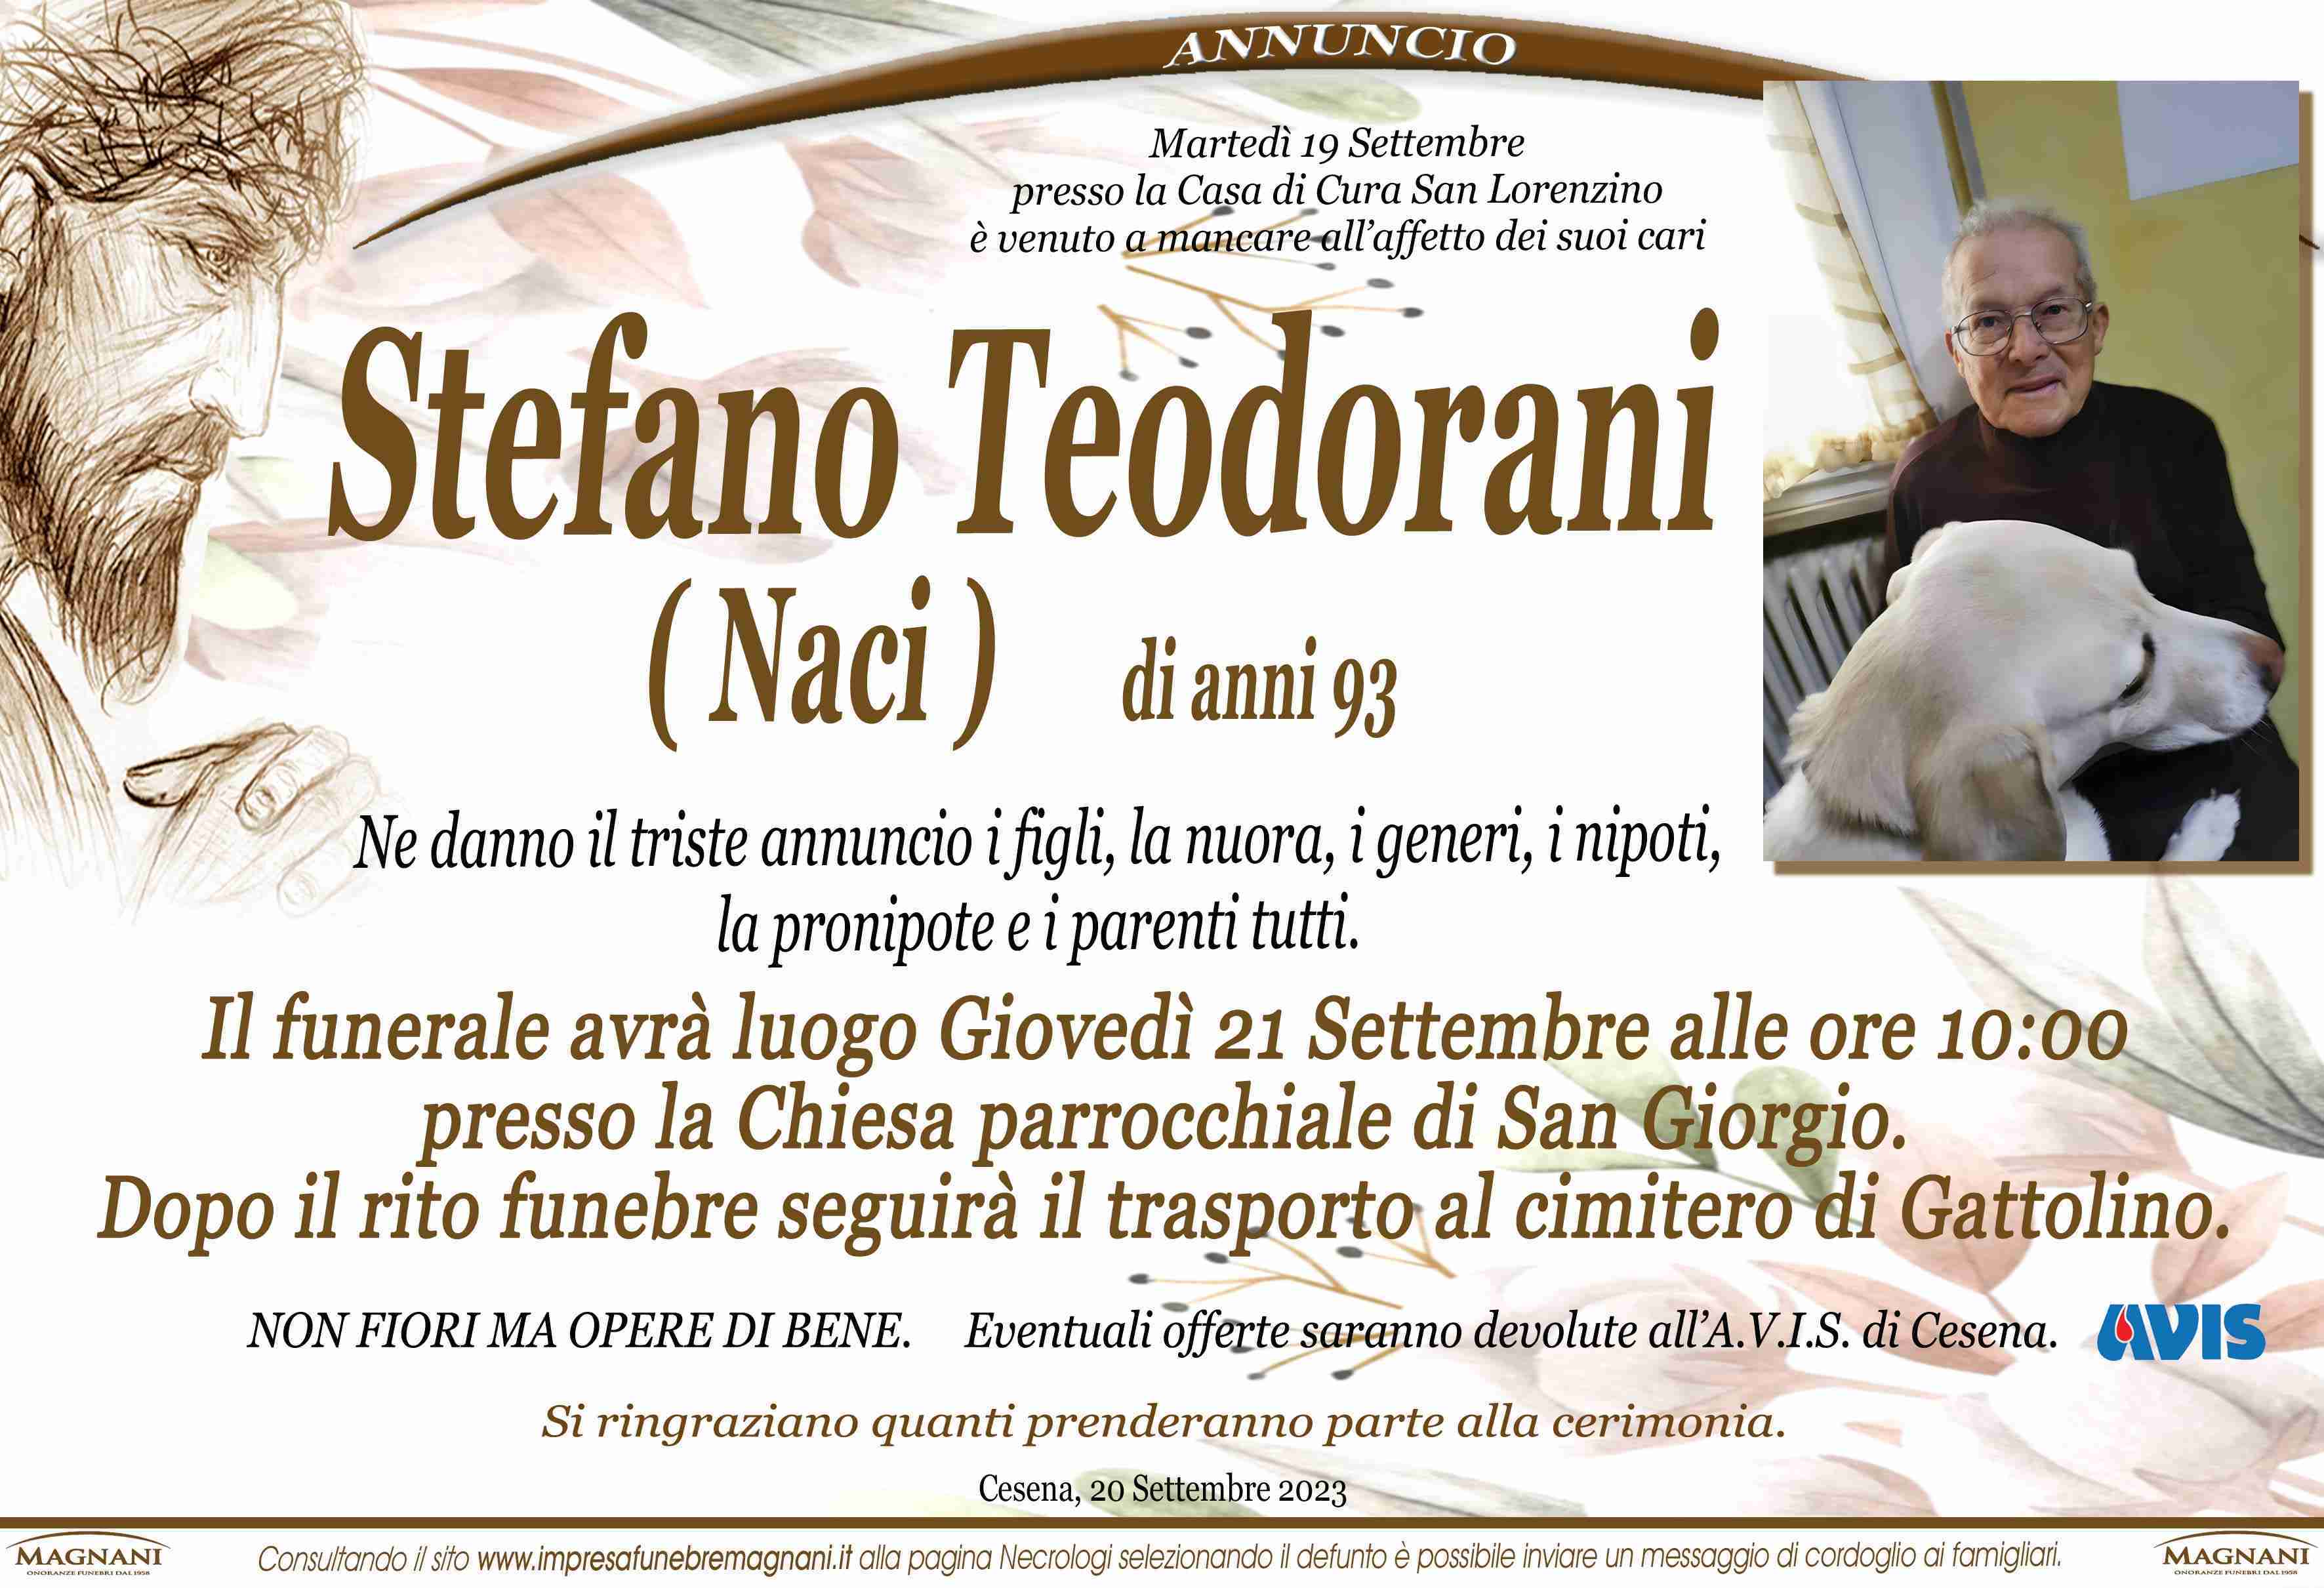 Stefano Teodorani